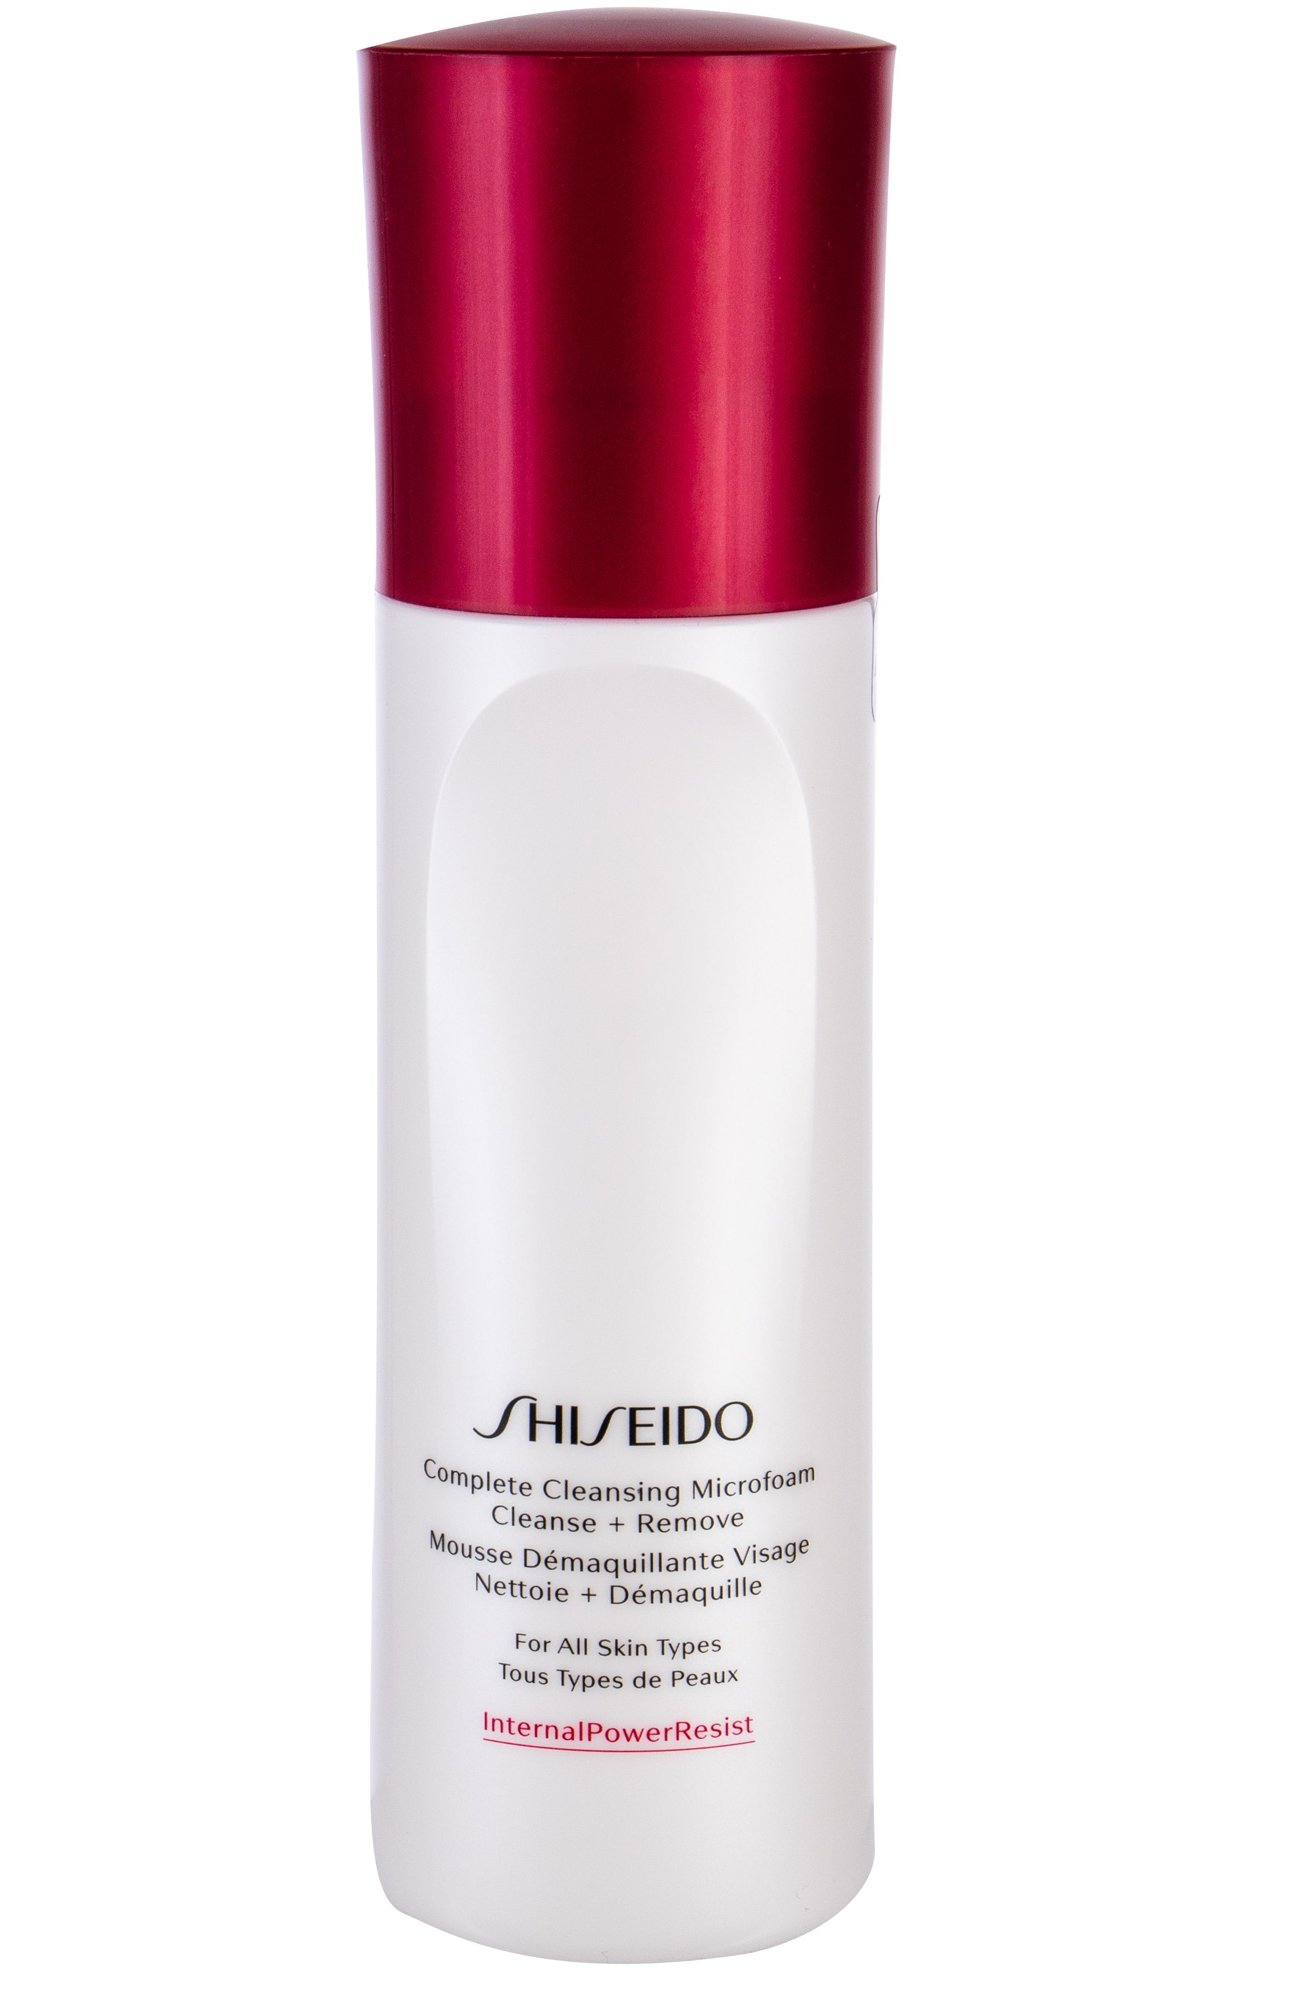 Shiseido Complete Cleansing Microfoam veido putos